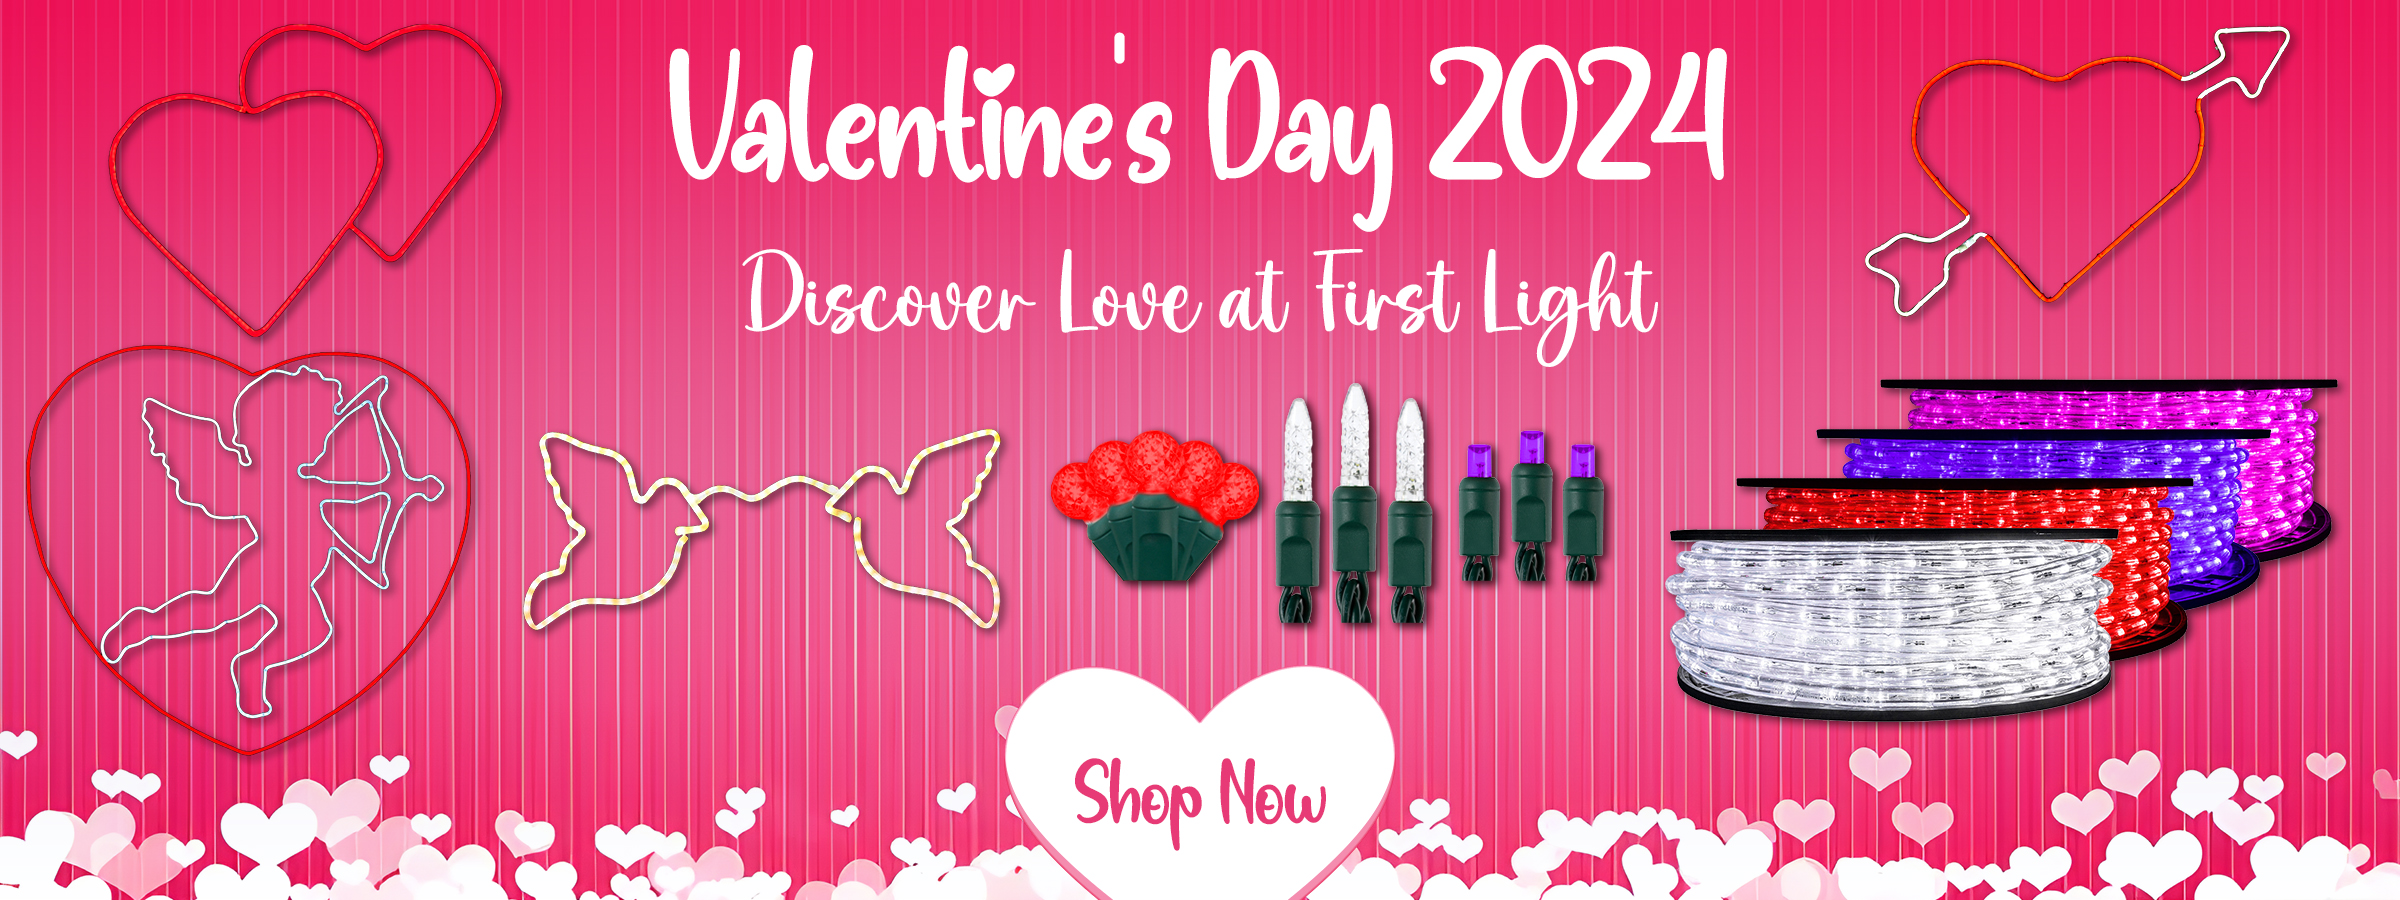 https://cdn11.bigcommerce.com/s-fz66rhptih/images/stencil/original/carousel/113/2400x900-ValentinesDatLights-2024.jpg?c=2